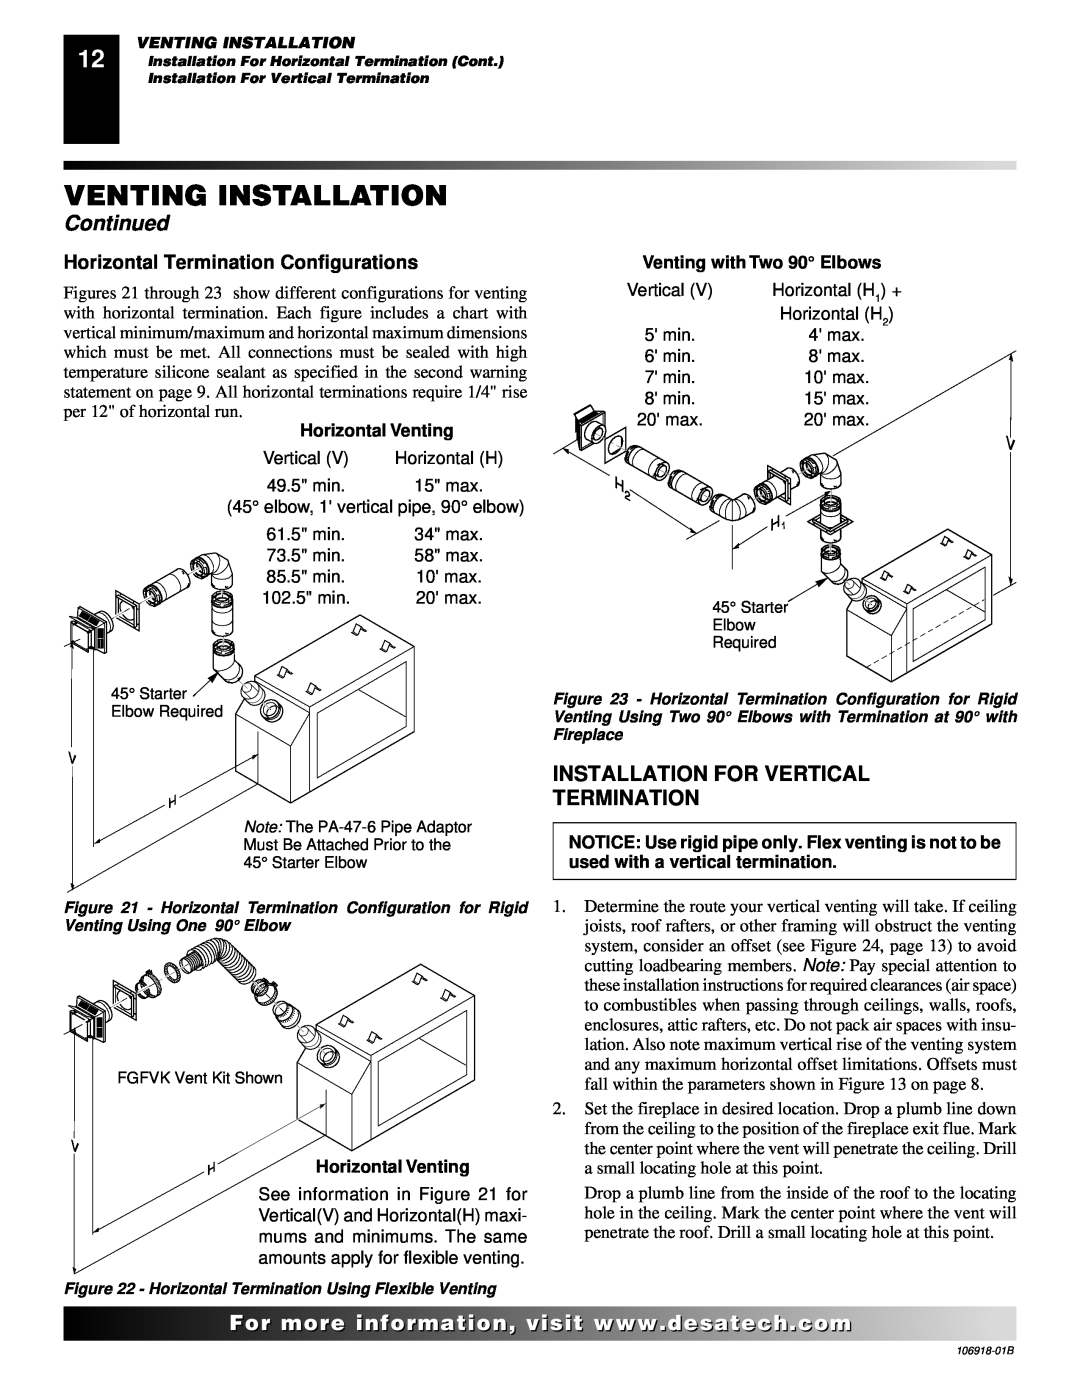 Desa VDDVF36PN/PP Installation For Vertical Termination, Horizontal Termination Configurations, Horizontal Venting 